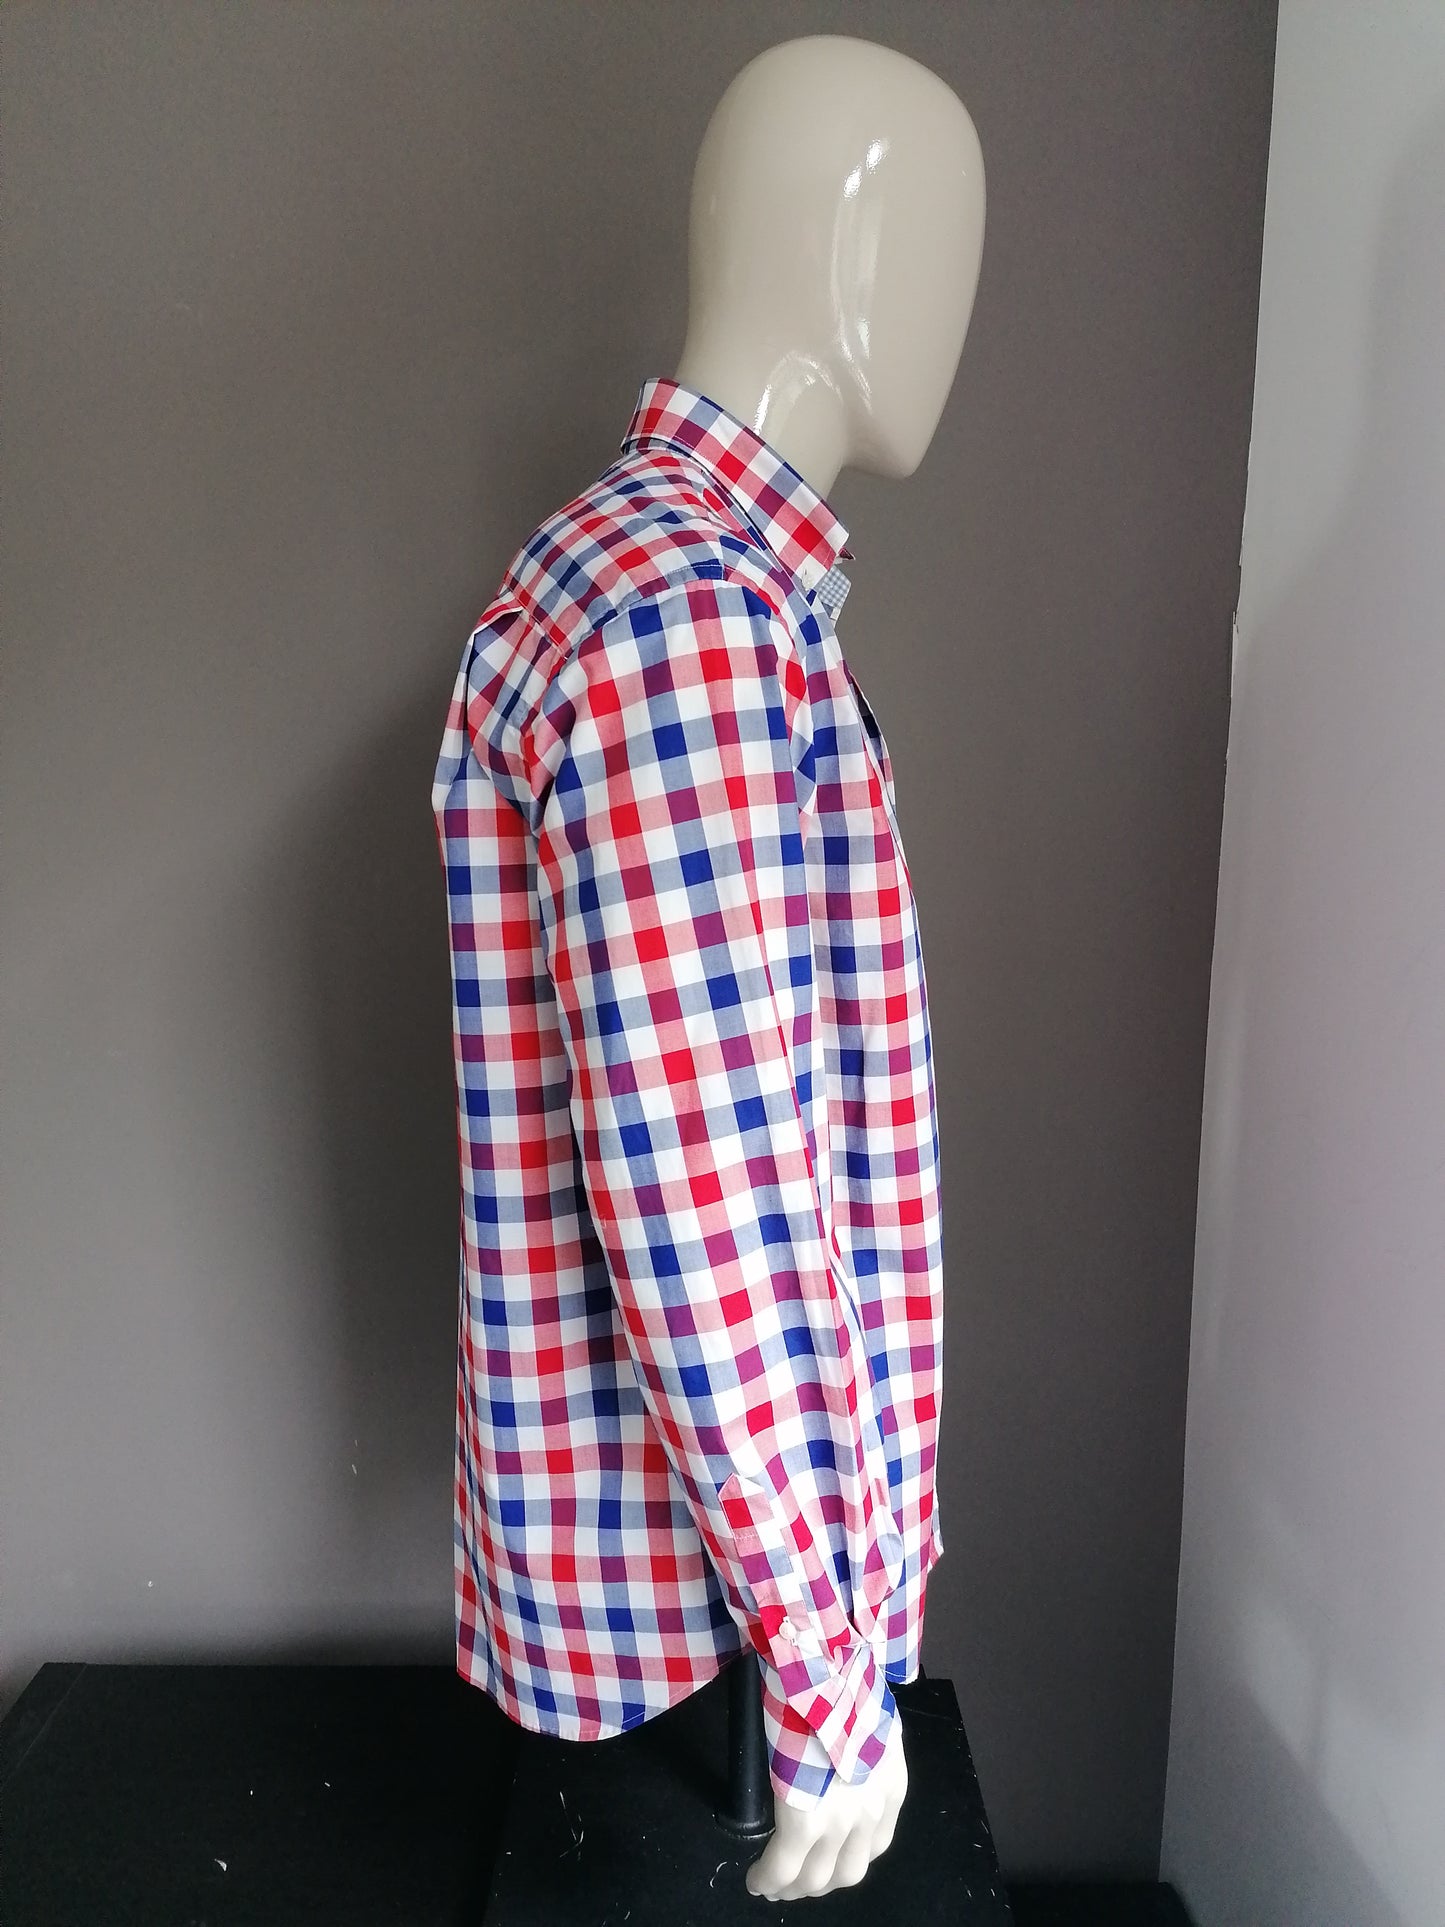 Paul & Shark shirt. Red white blue checkered. Size 42 / L / XL